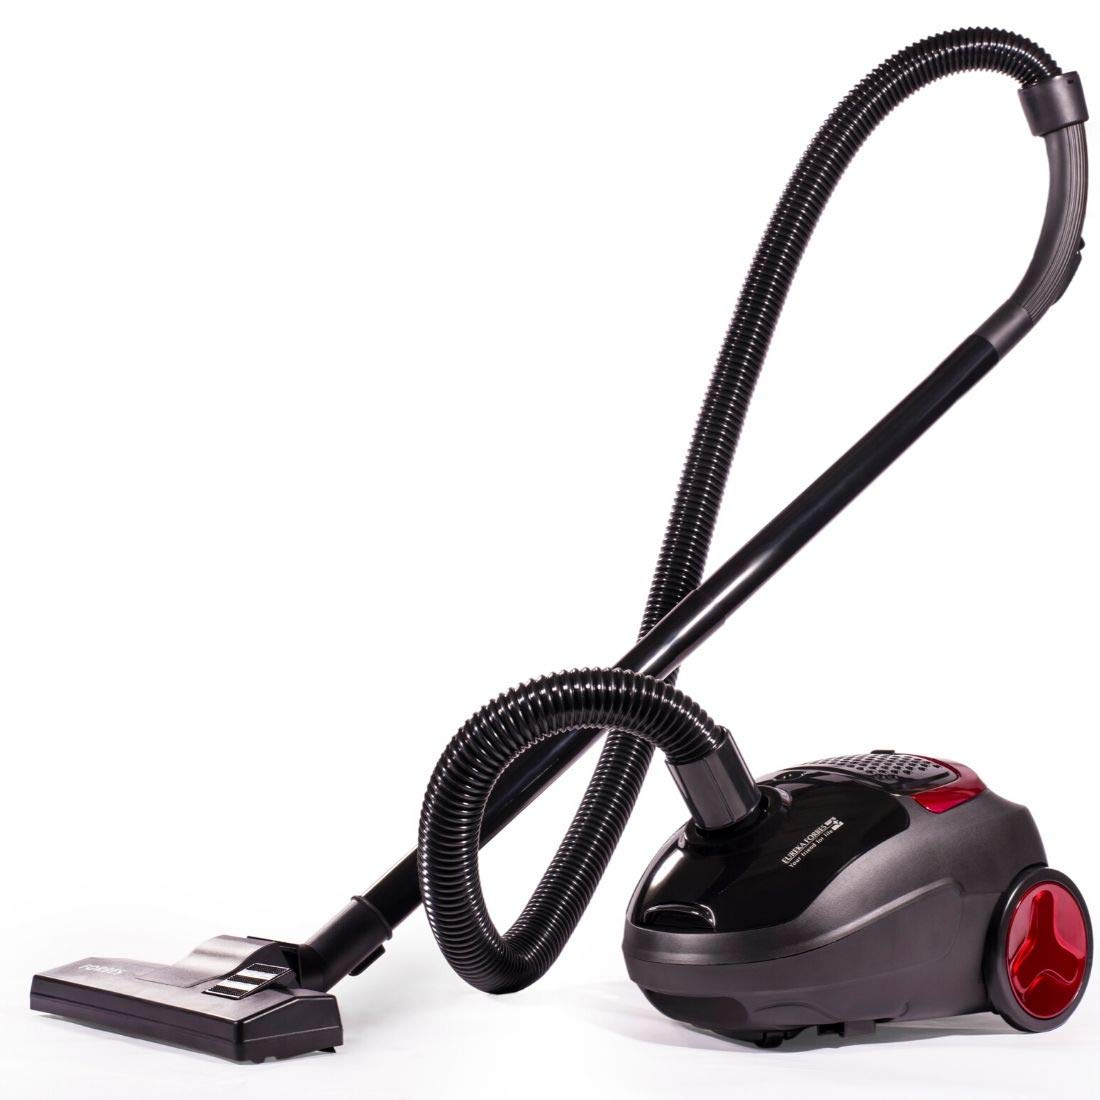 Eureka Forbes Trendy Zip 1000 Watts powerful suction vacuum cleaner